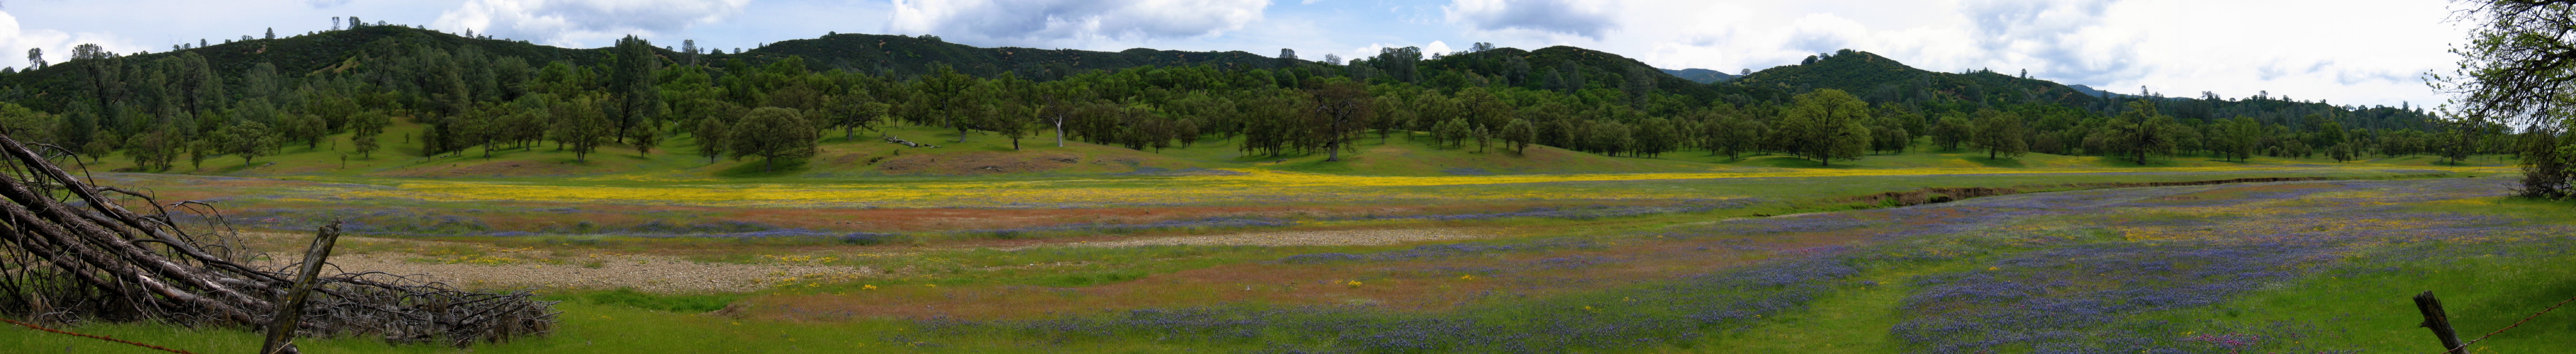 Wildflowers in Upper San Antonio Valley Panorama